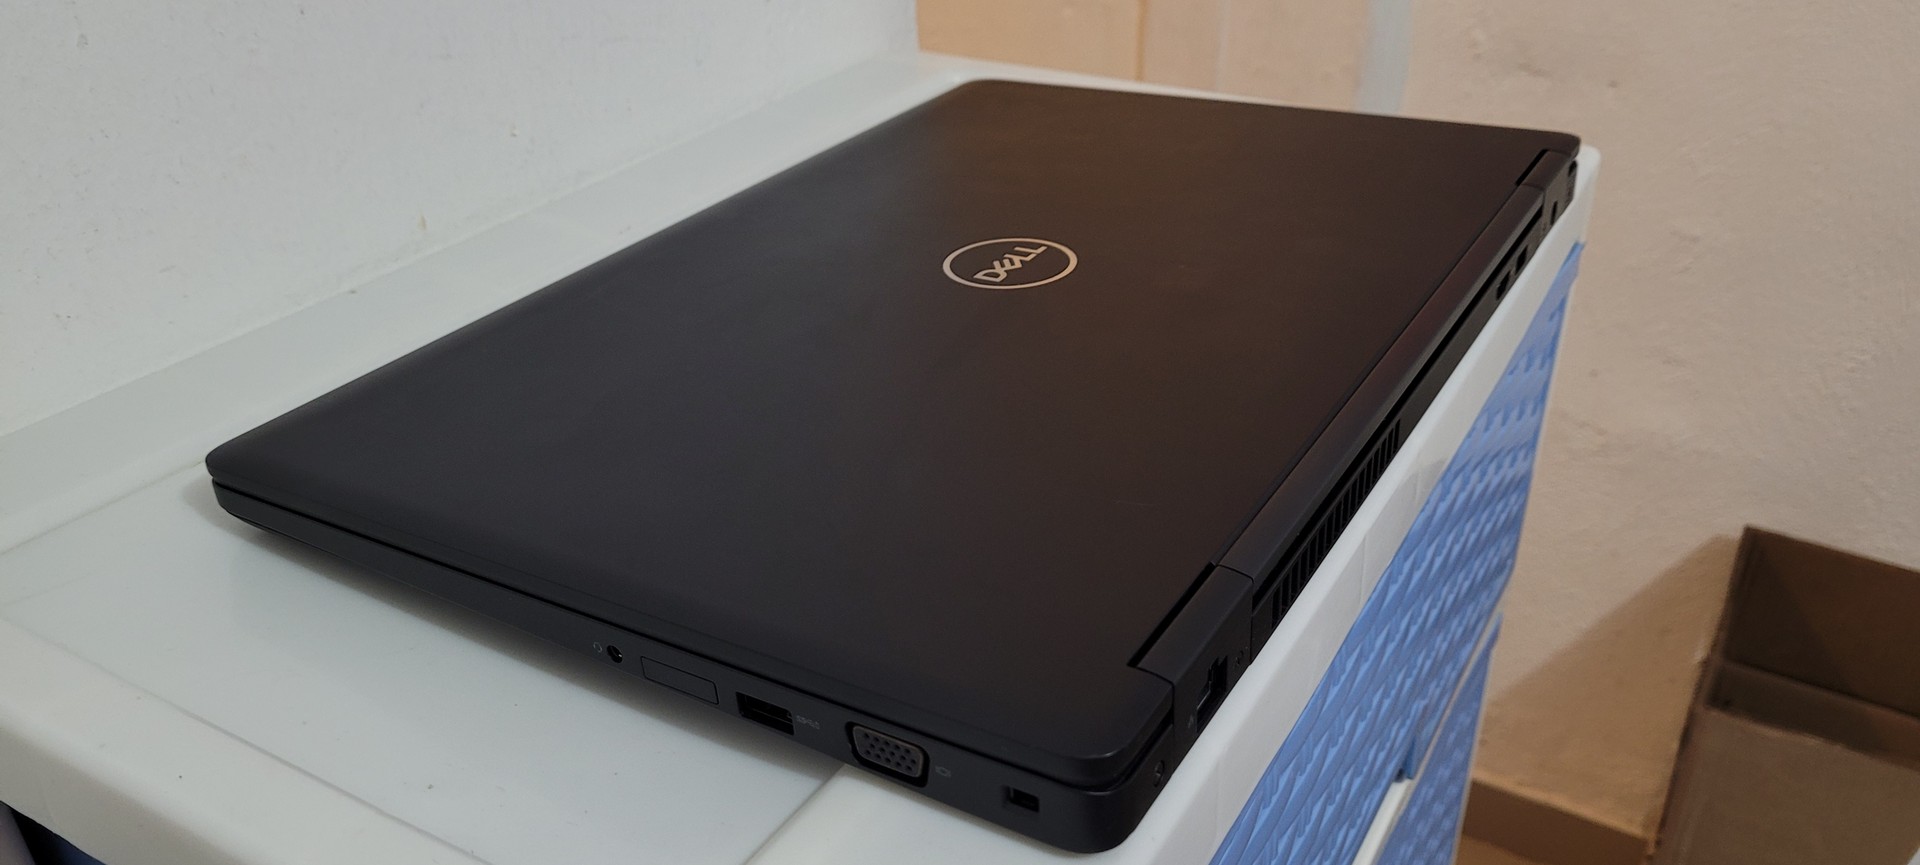 computadoras y laptops - Dell 5580 17 Pulg Core i5 7ma Gen Ram 12gb ddr4 Disco 256gb SSD Nvidea mx 940 2g 2